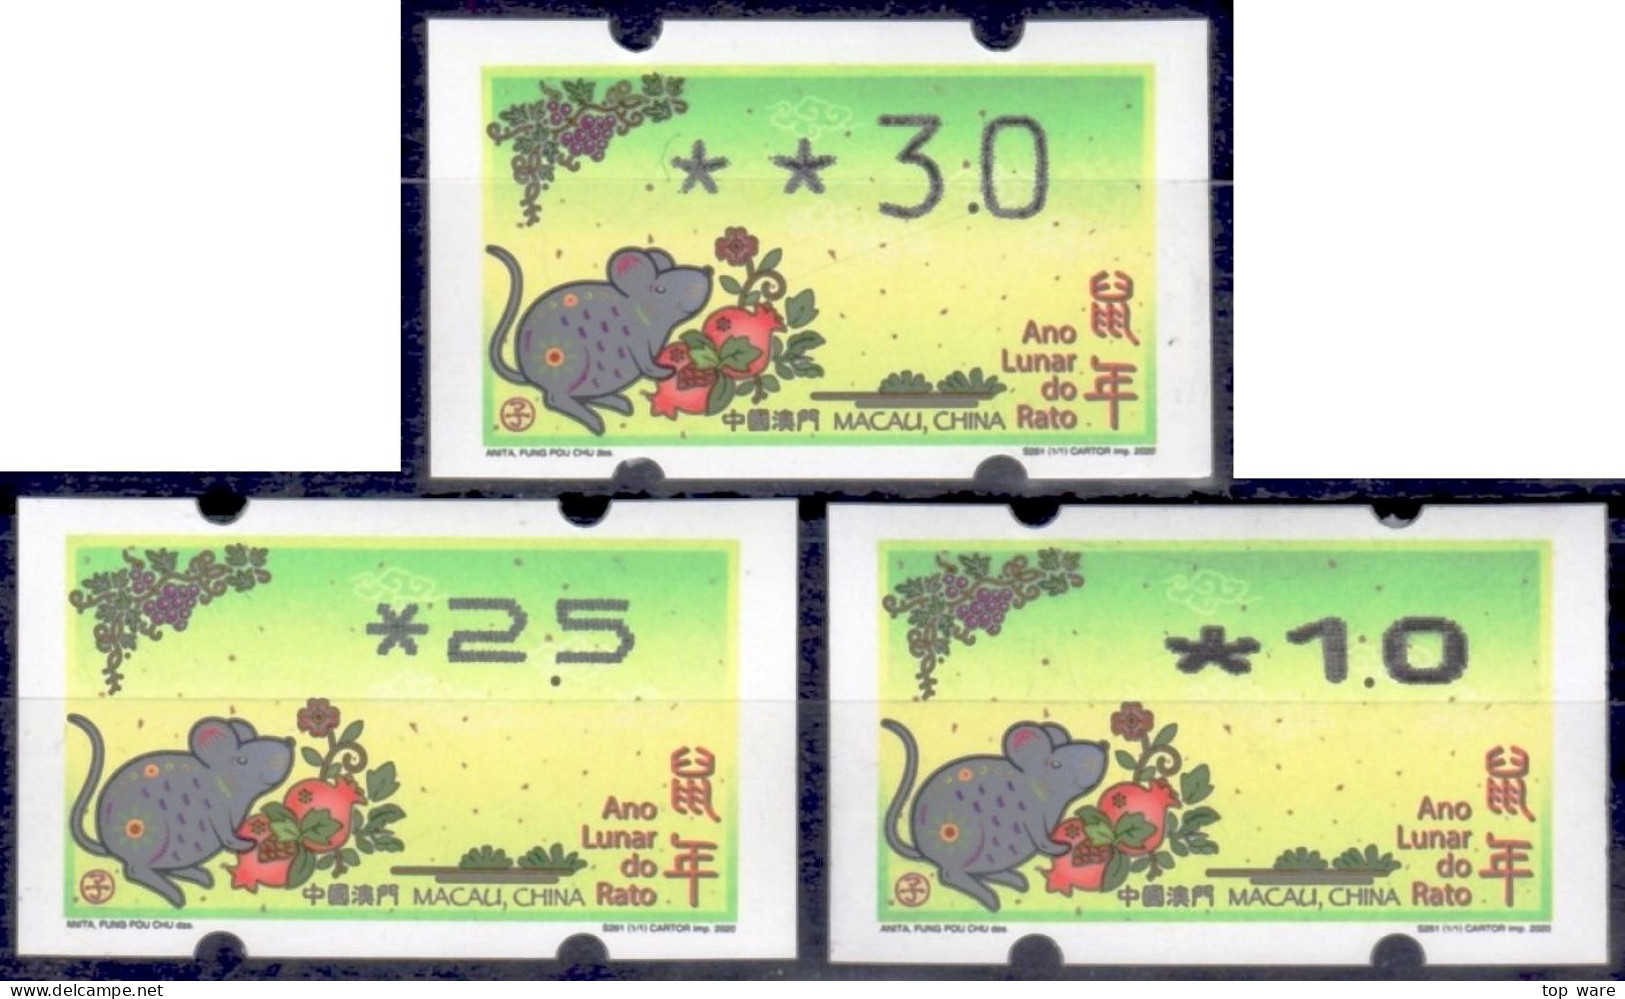 2020 China Macau ATM Stamps Ratte Maus Rat / Alle Drei Typen Klussendorf Nagler Newvision Automatenmarken Automatici - Automatenmarken